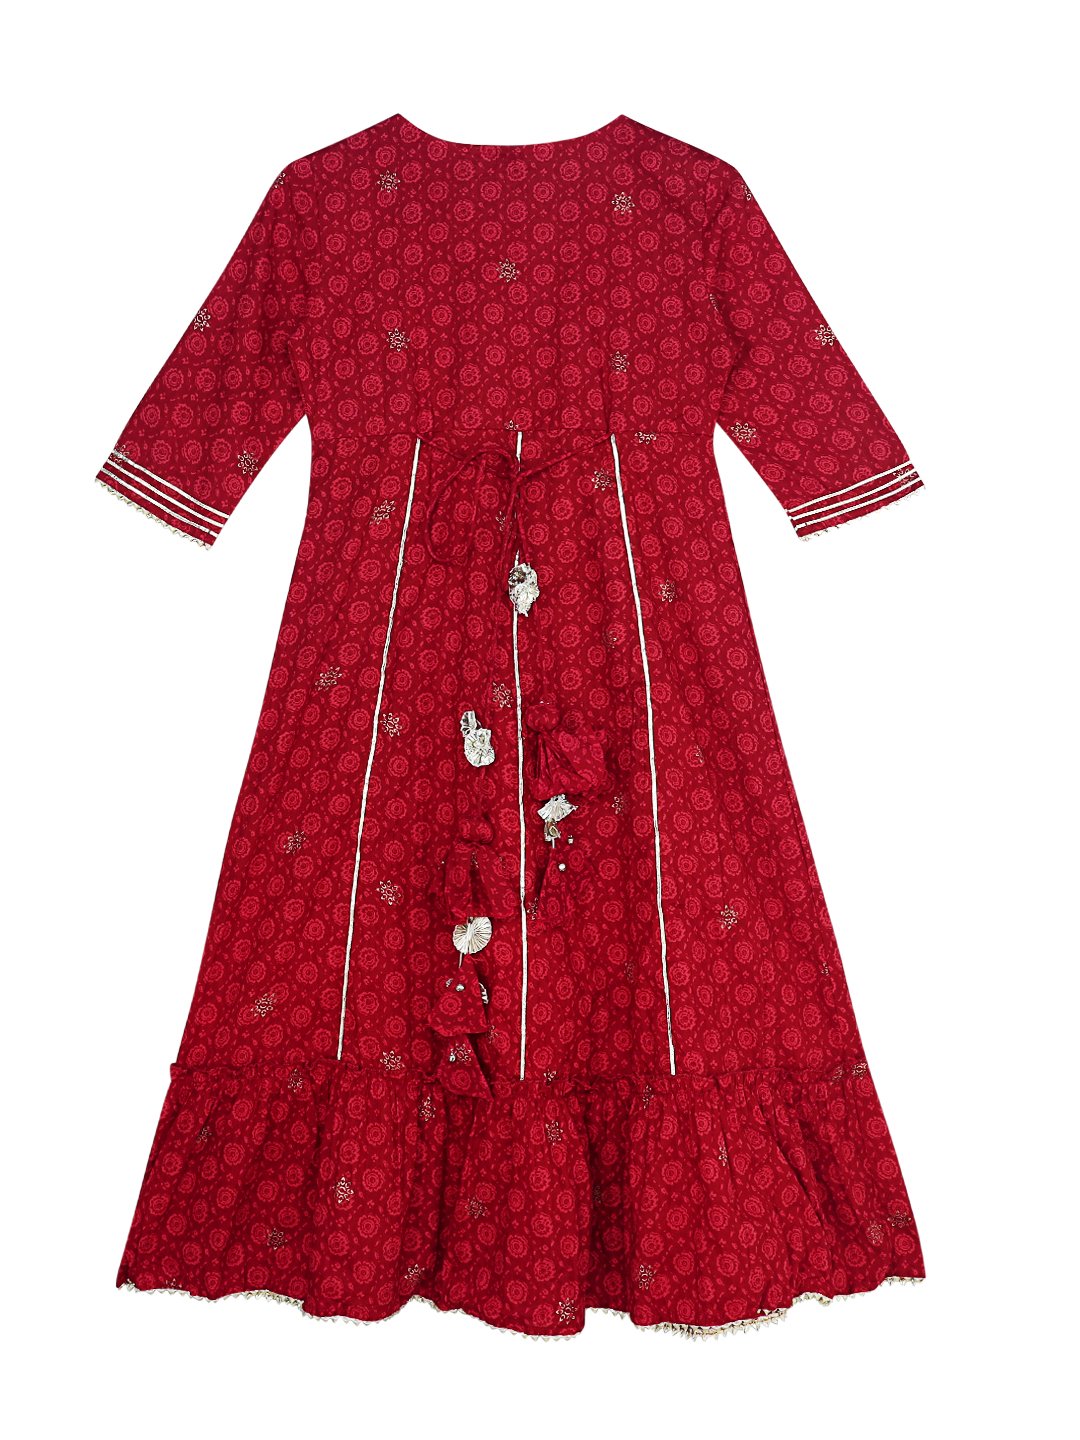 Ishin Girls Maroon Embroidered Tiered Dress